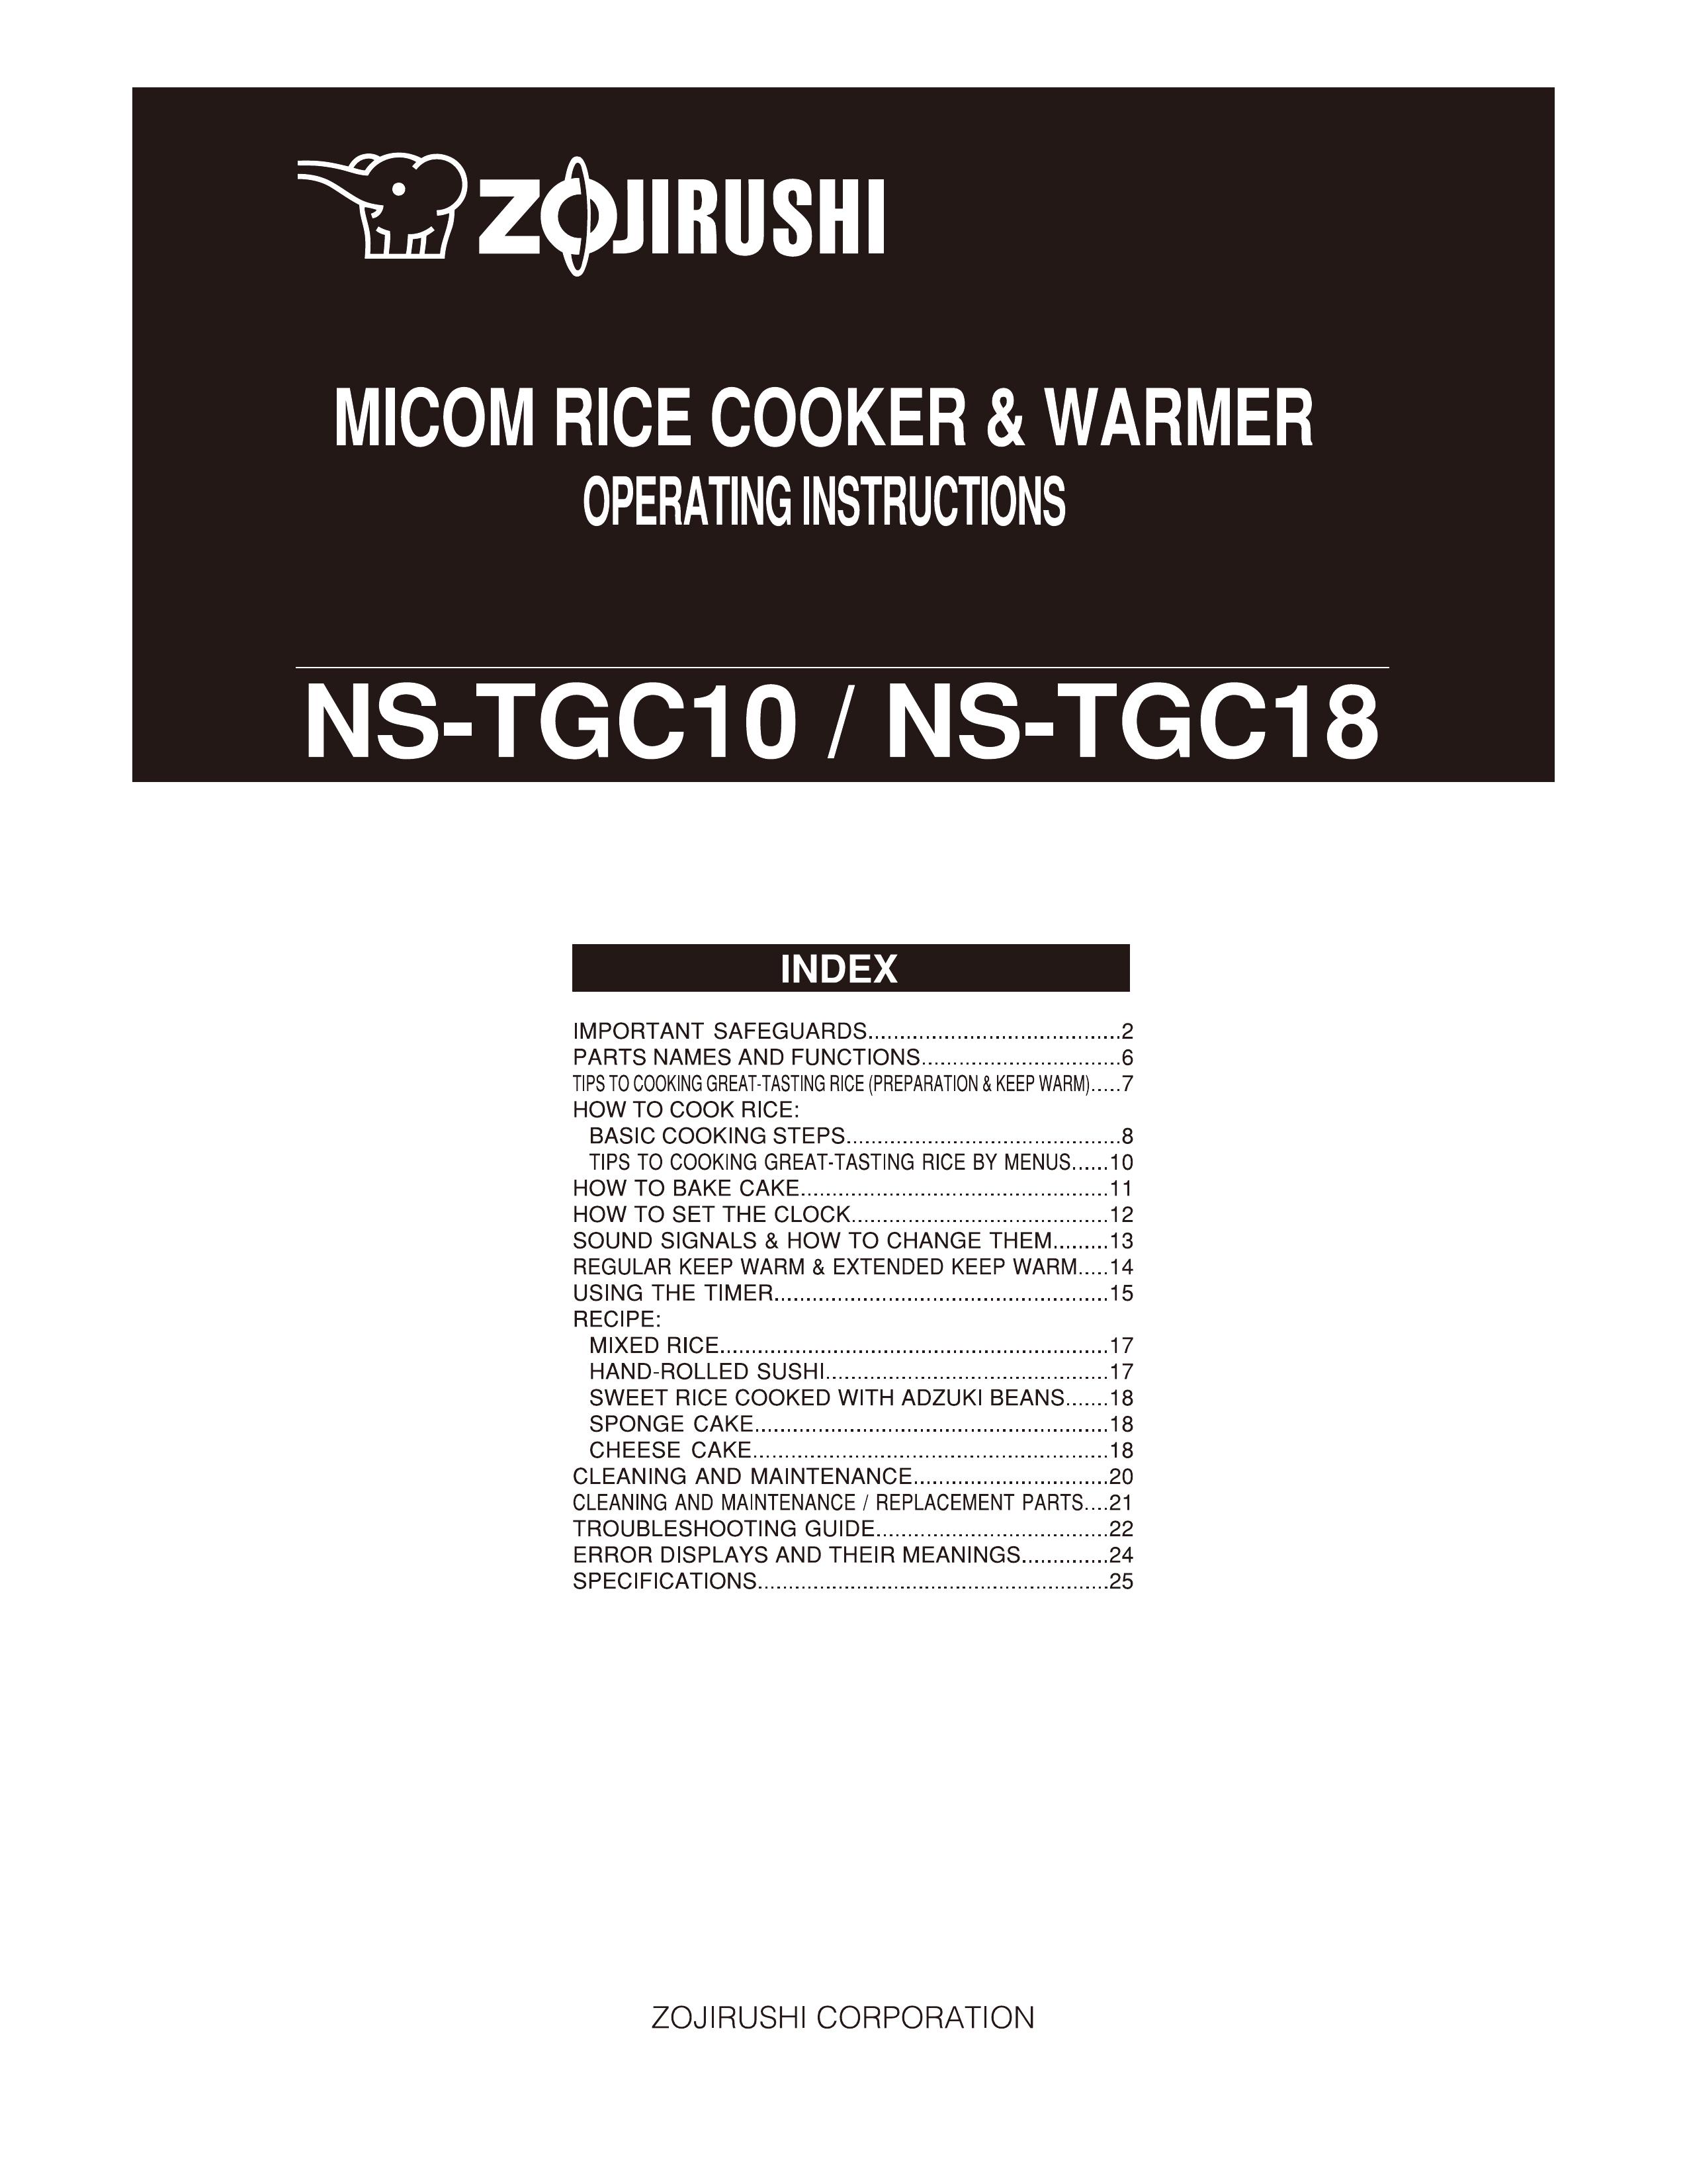 Zojirushi NS-TGC18 Rice Cooker User Manual